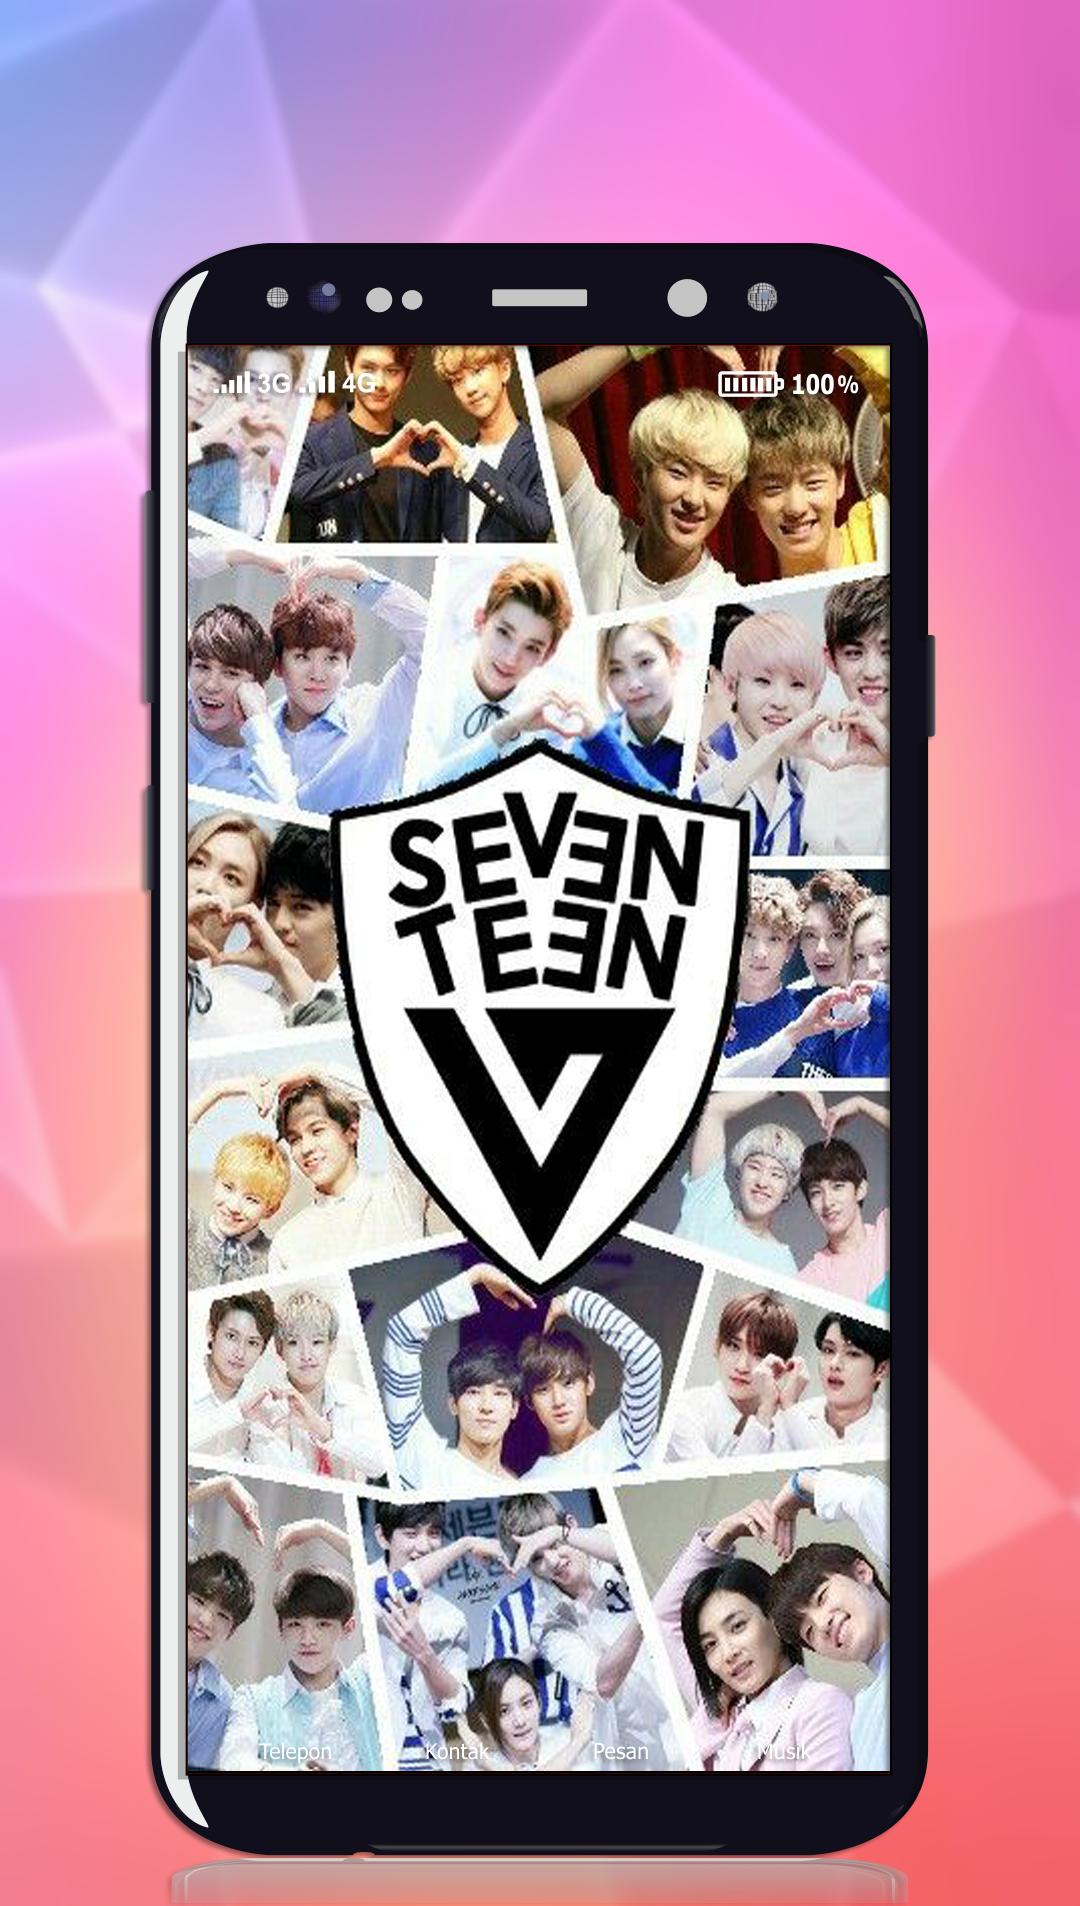 Seventeen Kpop Wallpaper For Android Apk Download